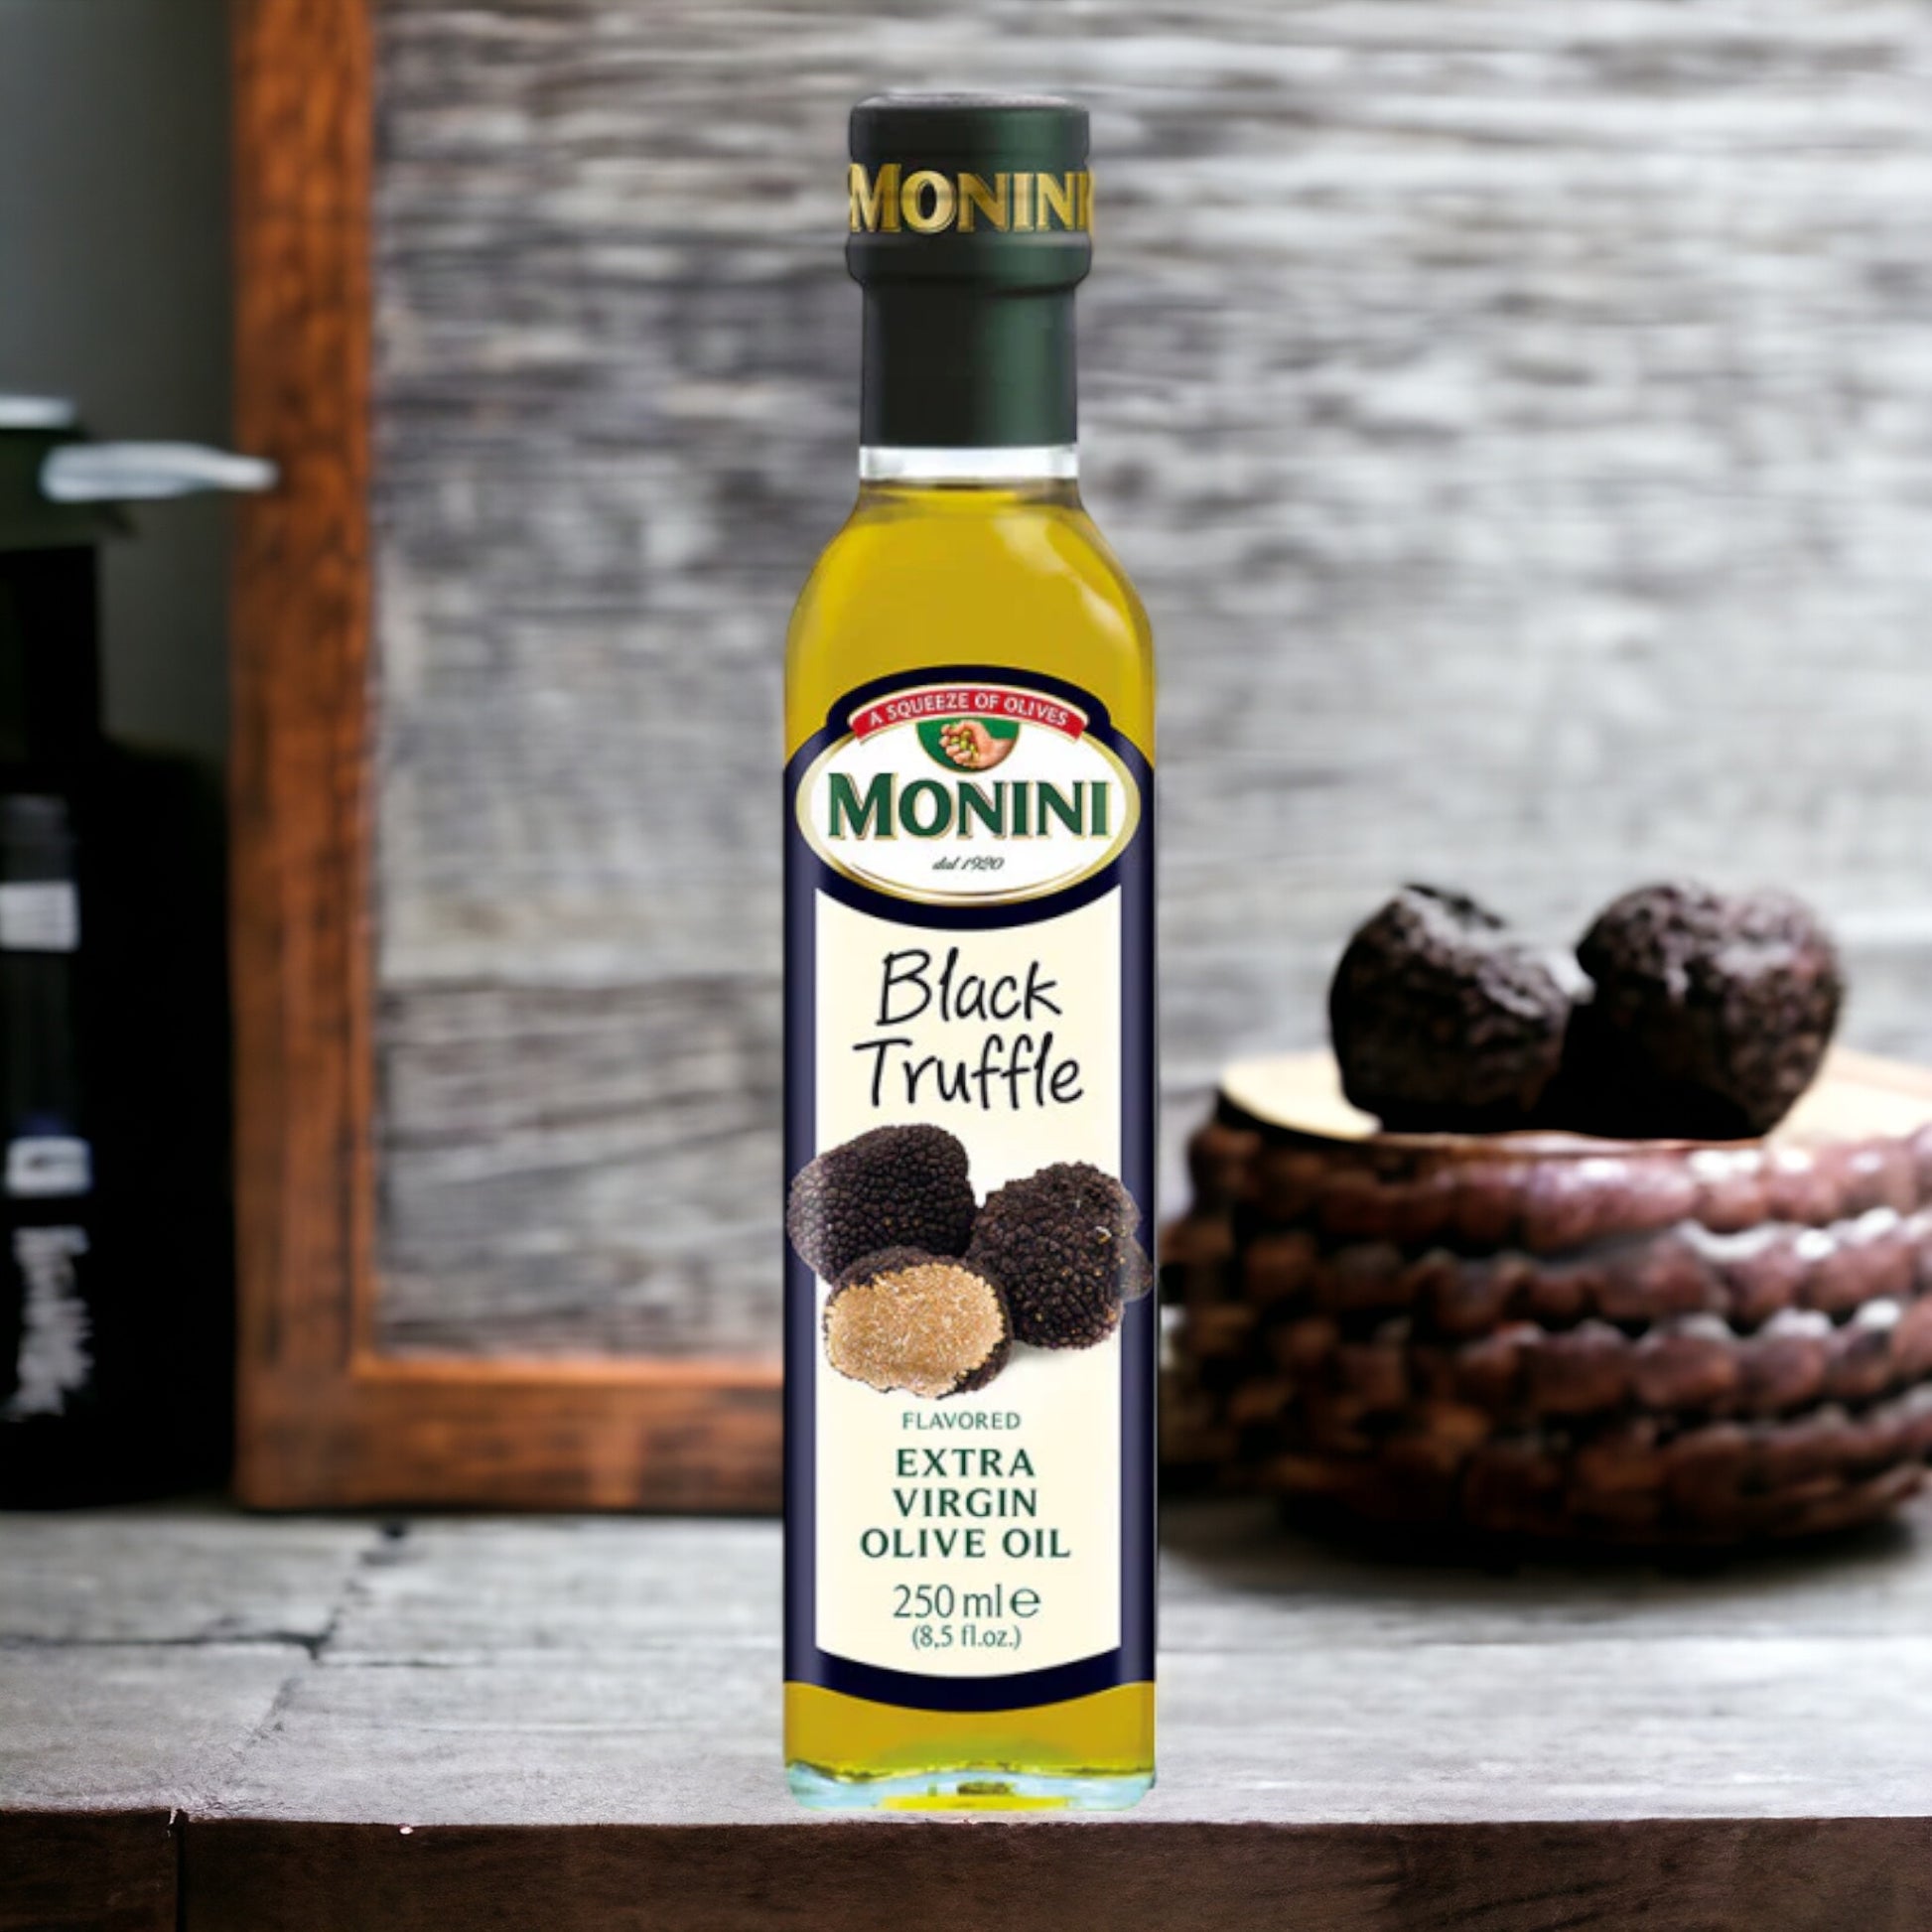 Monini Black Truffle Flavored Extra Virgin Olive Oil 250ml - Marisa's Shopping Network 